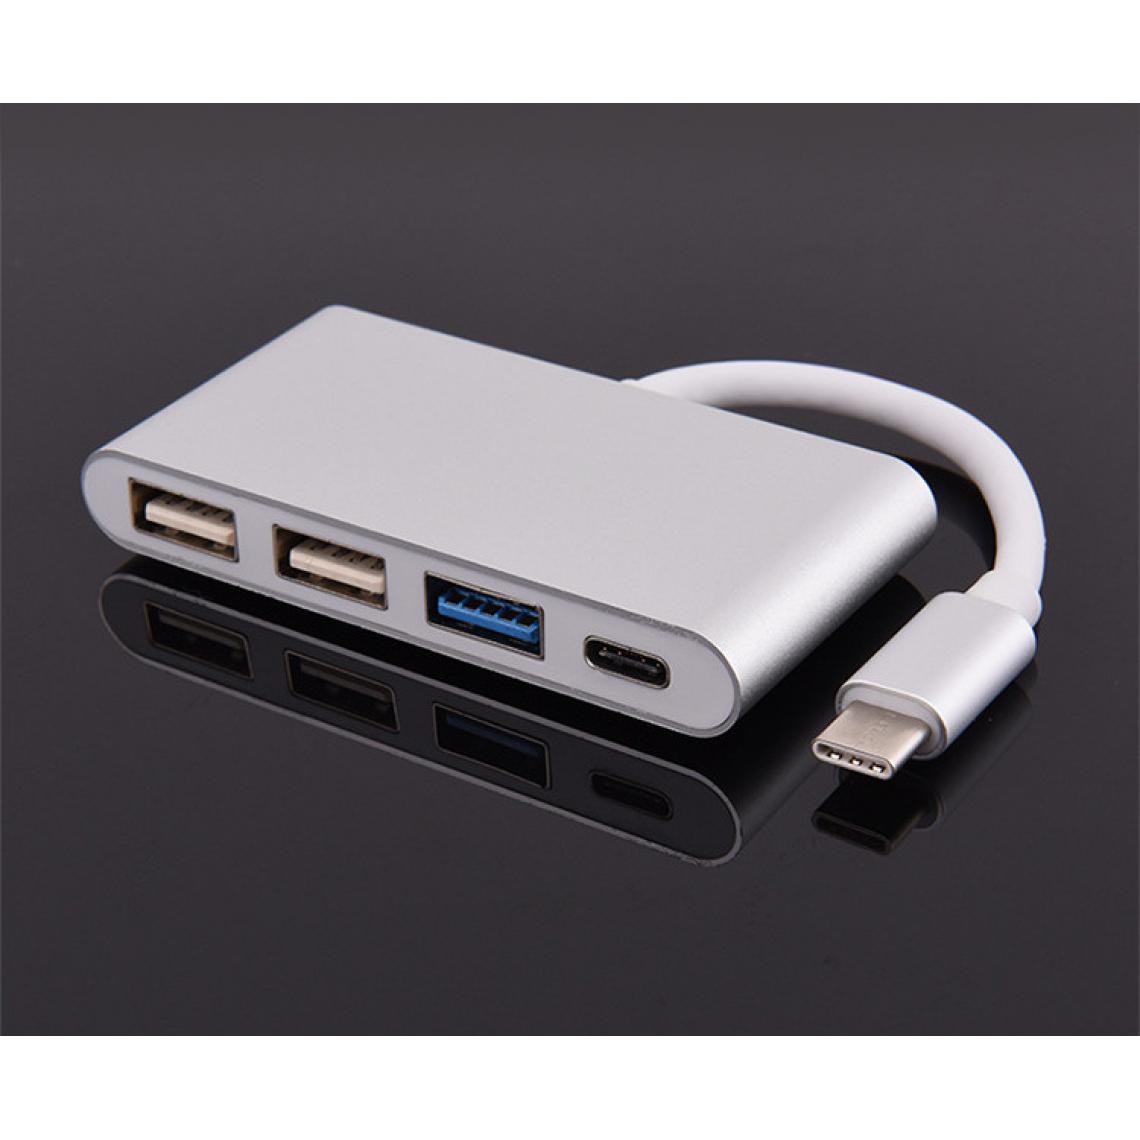 Shot - Multi Adaptateur 4 en 1 Type C pour HONOR 9 Smartphone Hub 2 ports USB 2.0 1 Port USB 3.0 (ARGENT) - Hub